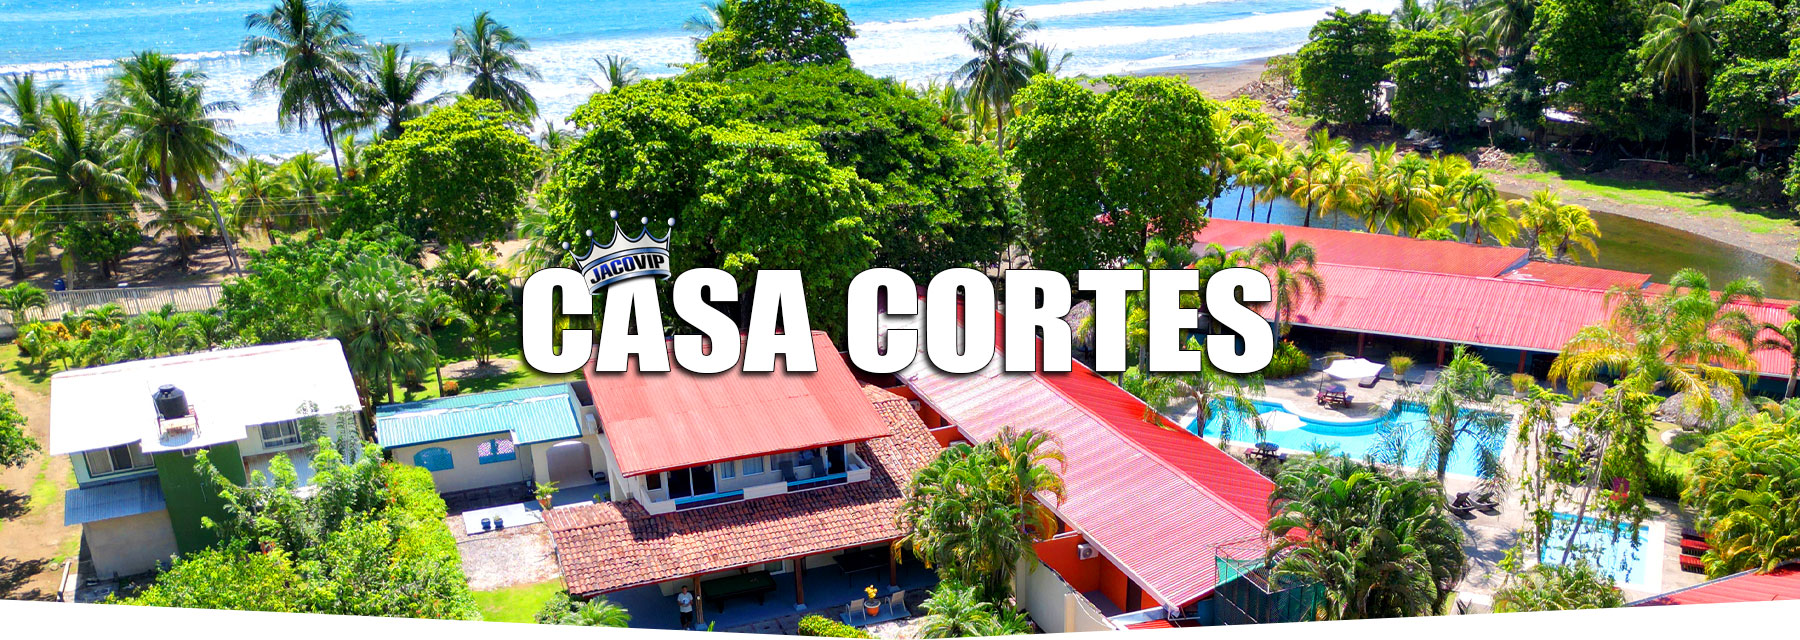 Casa Cortes Jaco VIP vacation rental villa large